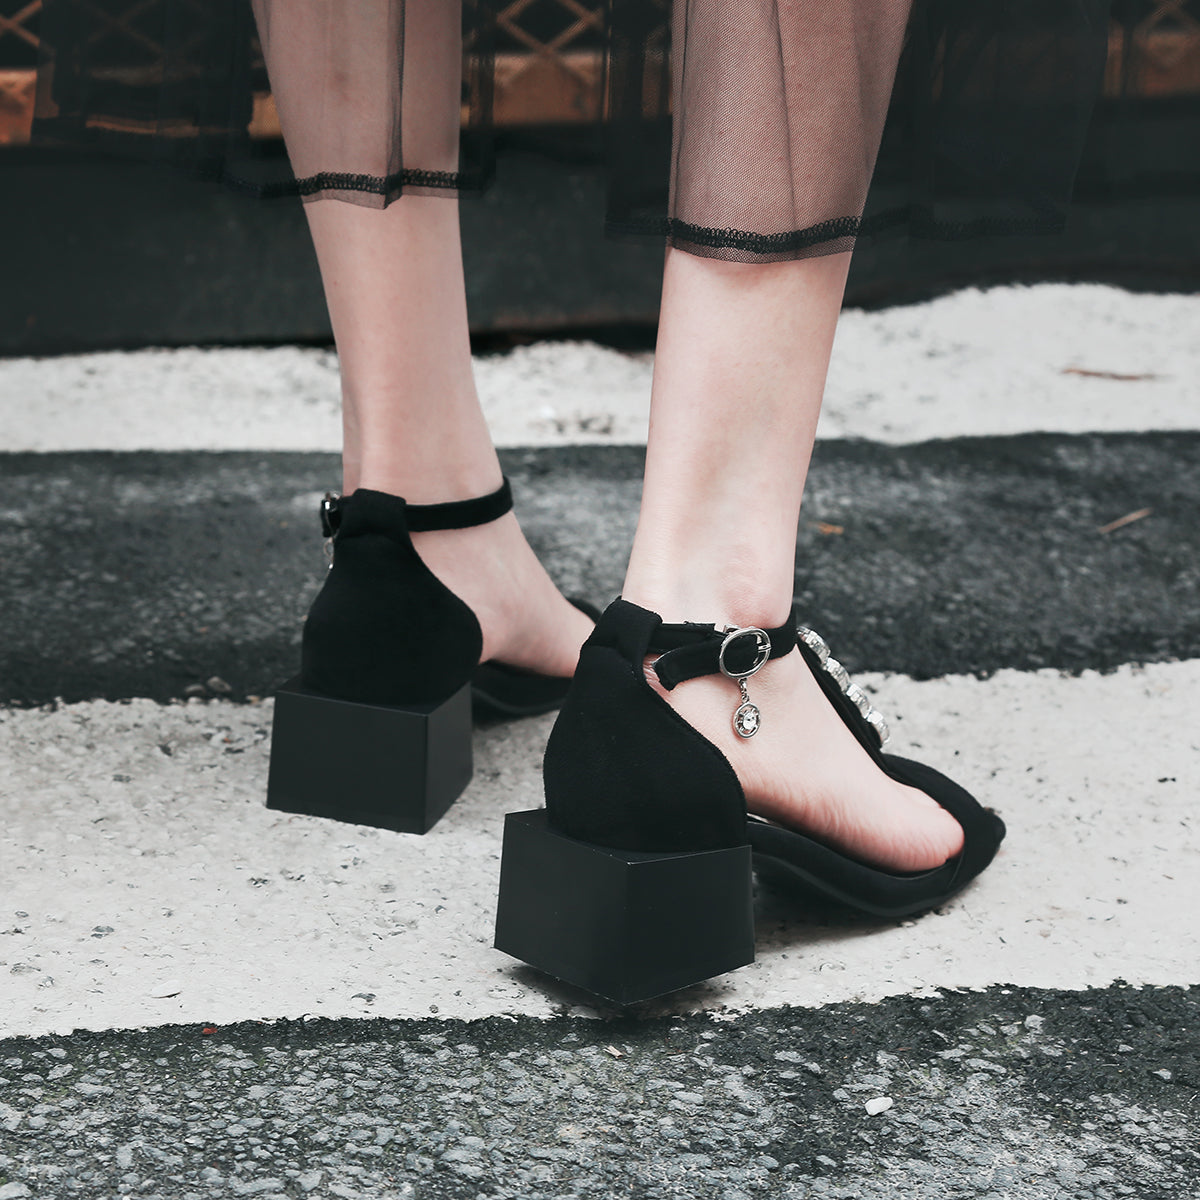 Bigsizeheels Stylish Buckle Open Toe Heel Covering Casual Sandals - Black freeshipping - bigsizeheel®-size5-size15 -All Plus Sizes Available!